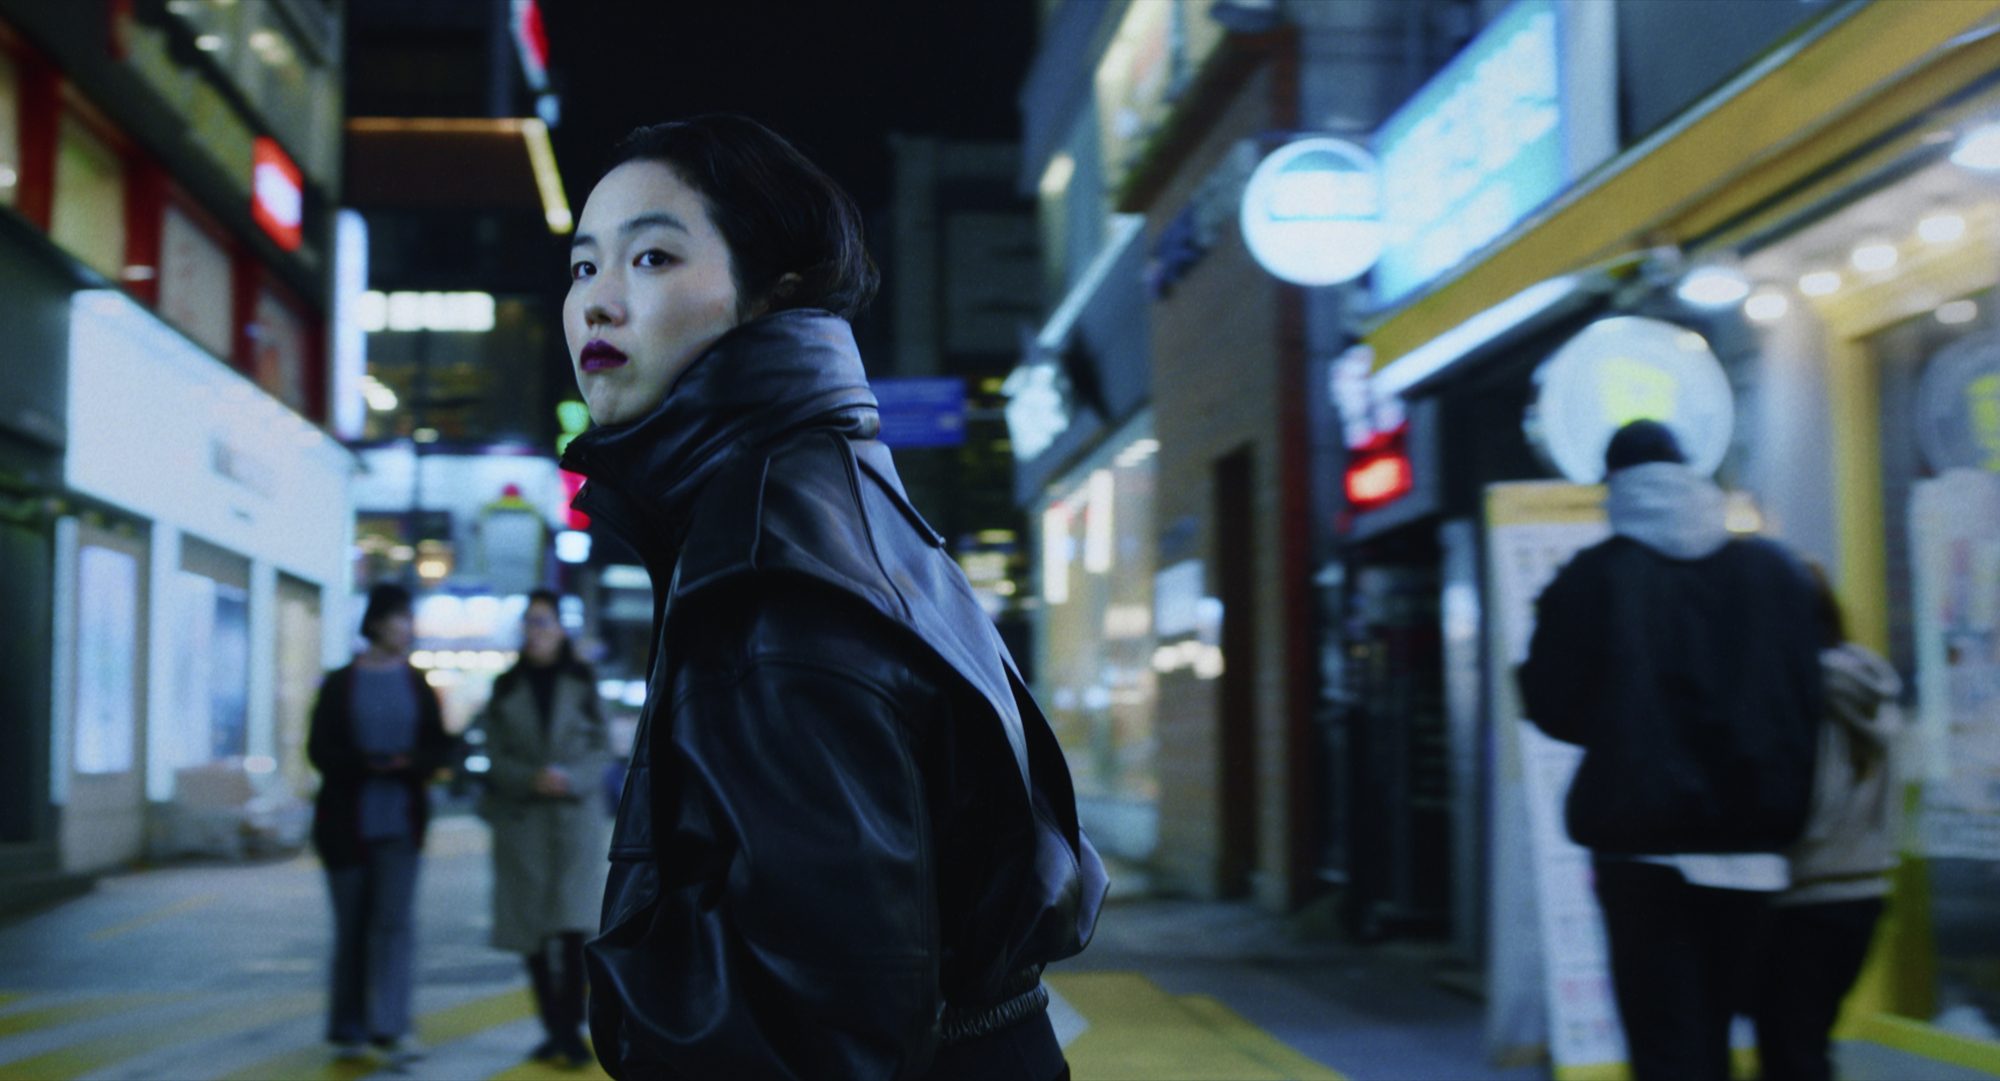 'Return to Seoul' Park Ji-Min as Frédérique Benoît AKA Freddie wearing a black leather jacket, looking over her shoulder on the street